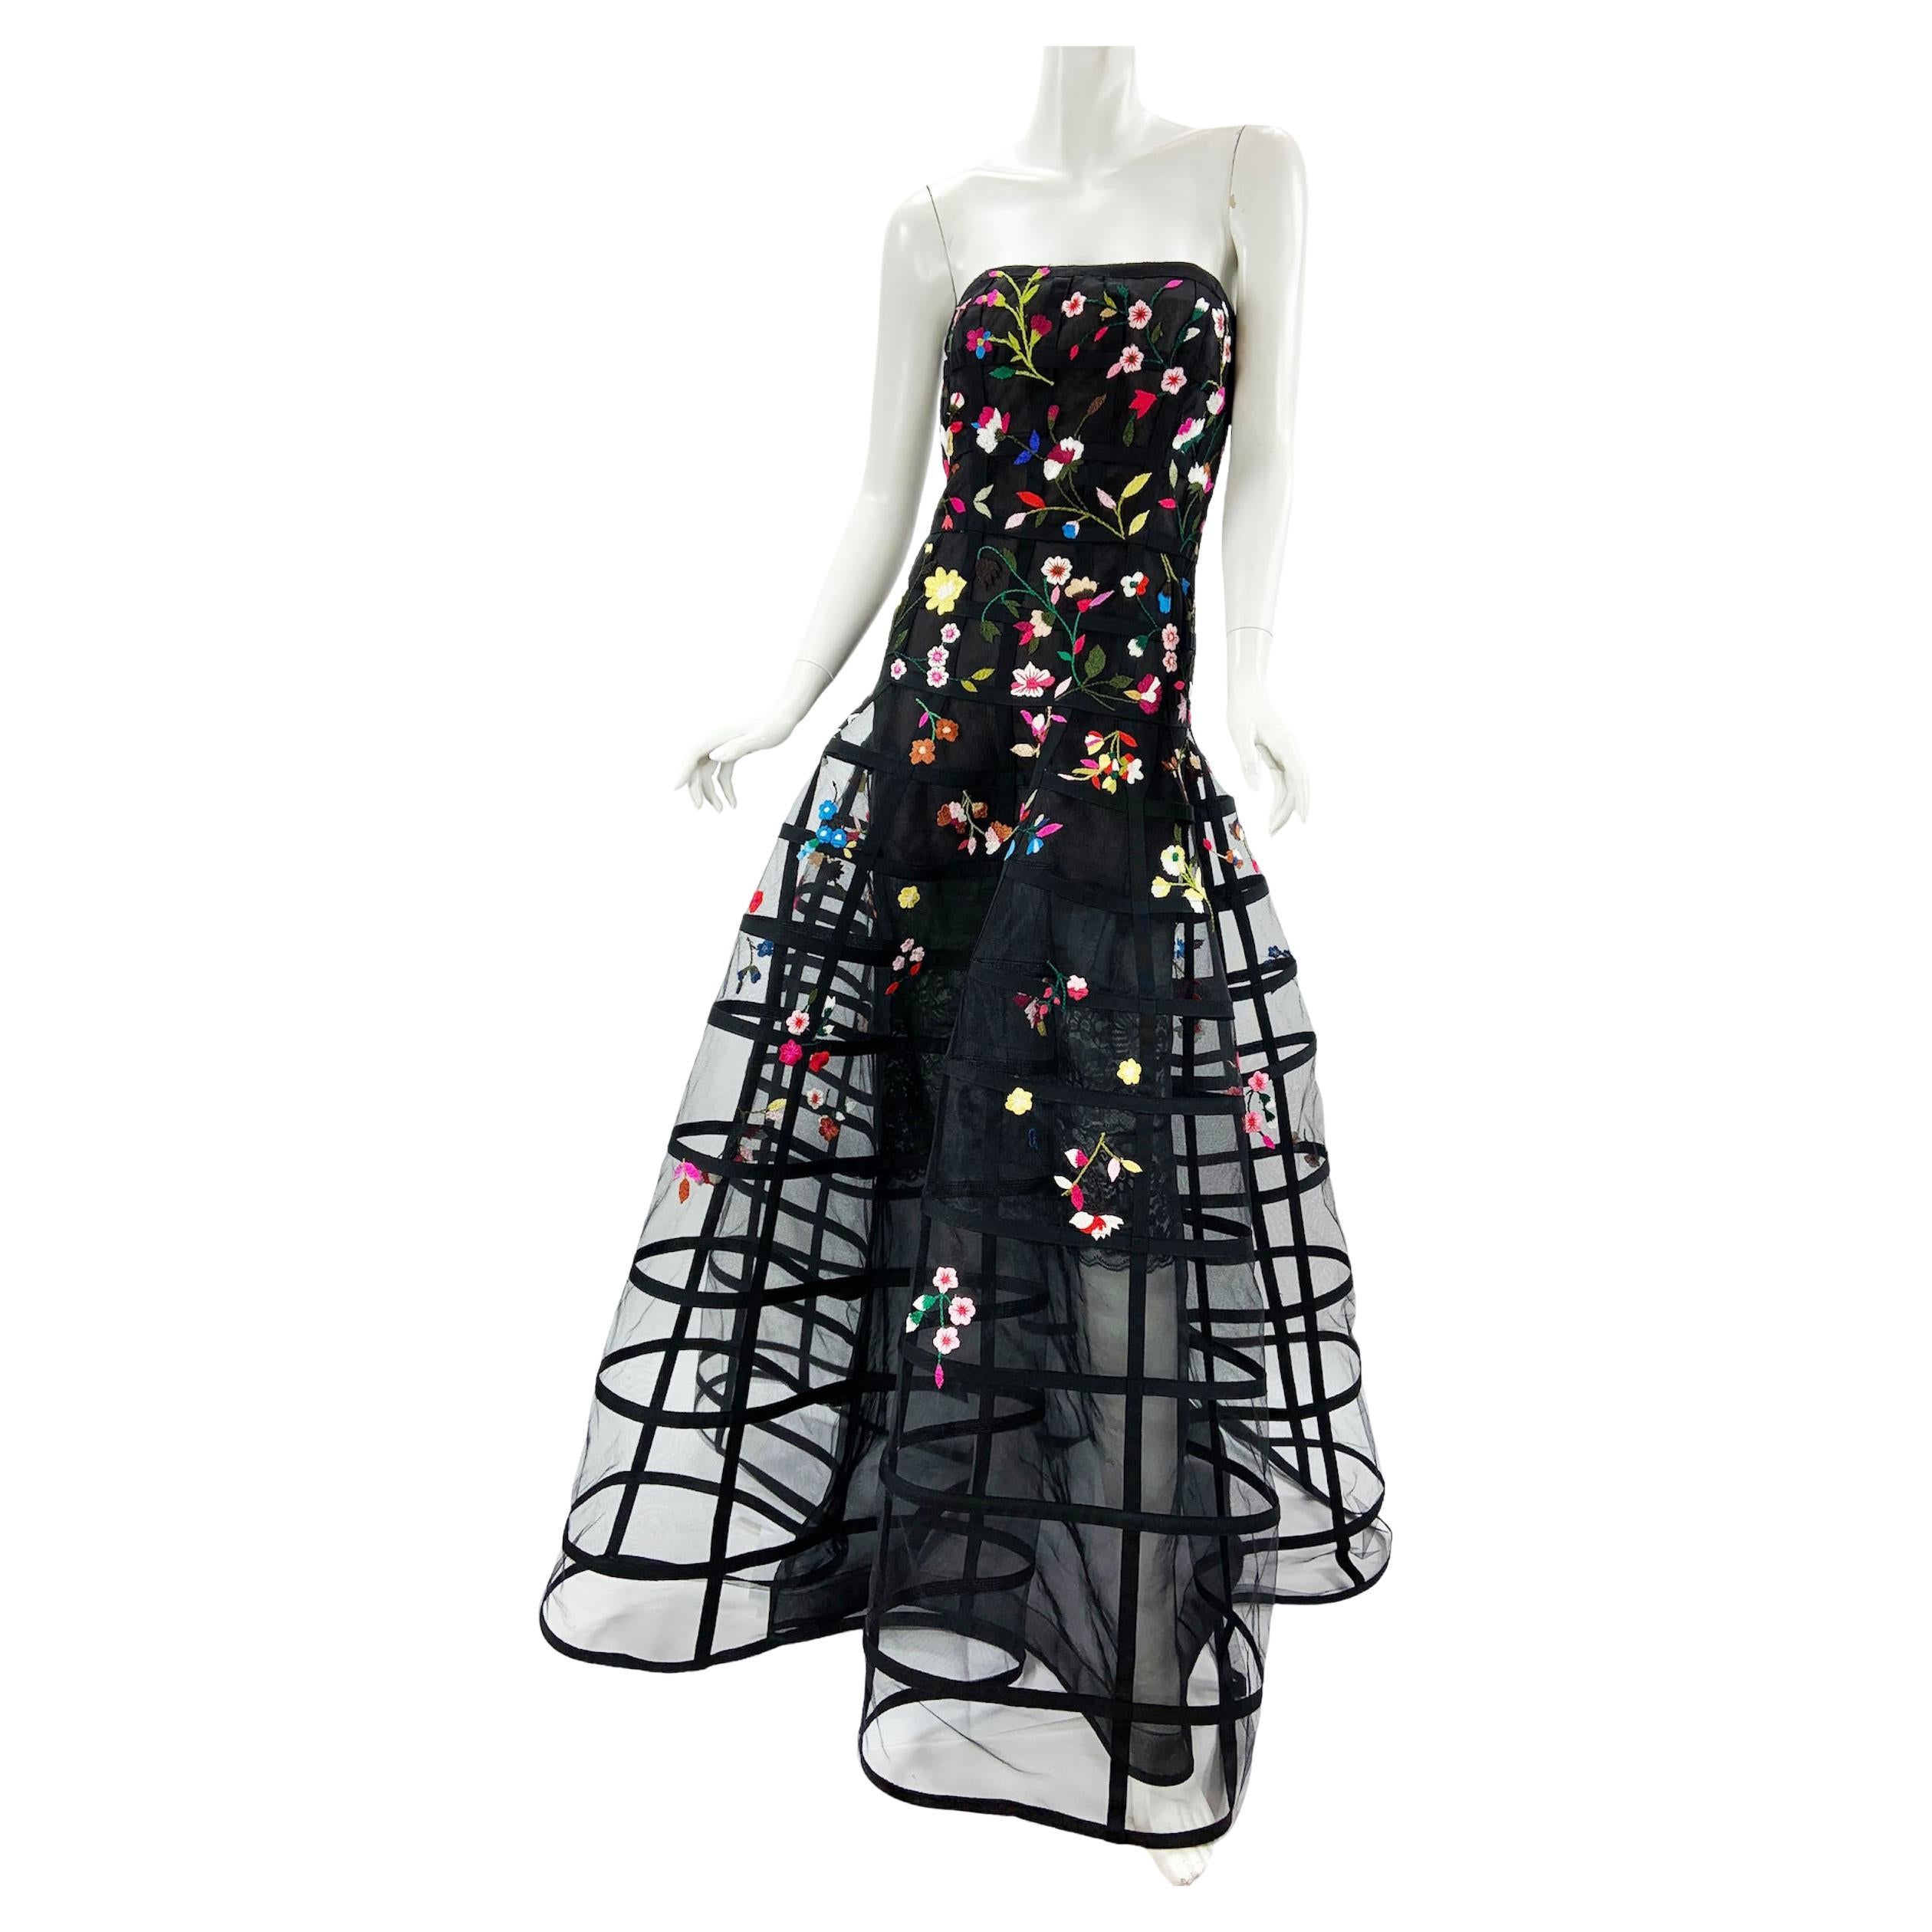 Iconic Oscar de la Renta 2015 Flower Embroidered Cage Corset Dress Gown US 8 For Sale